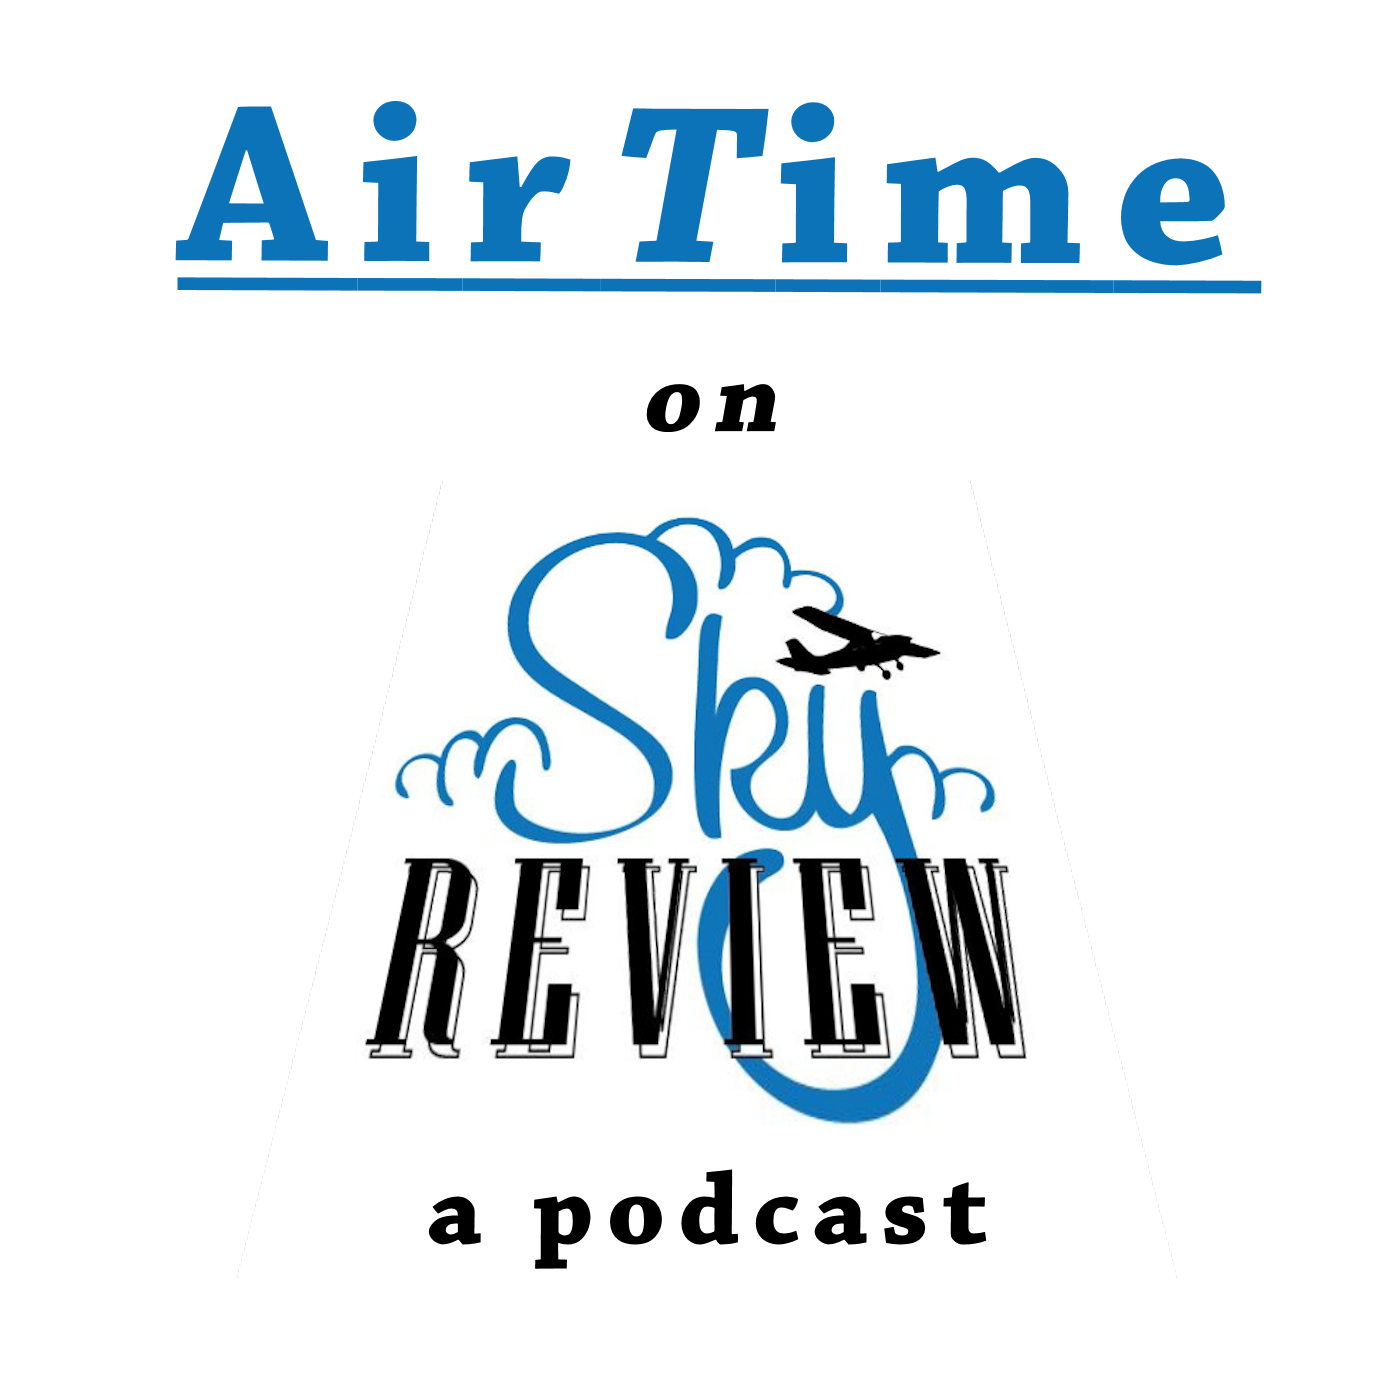 AirTime — a Sky Review podcast